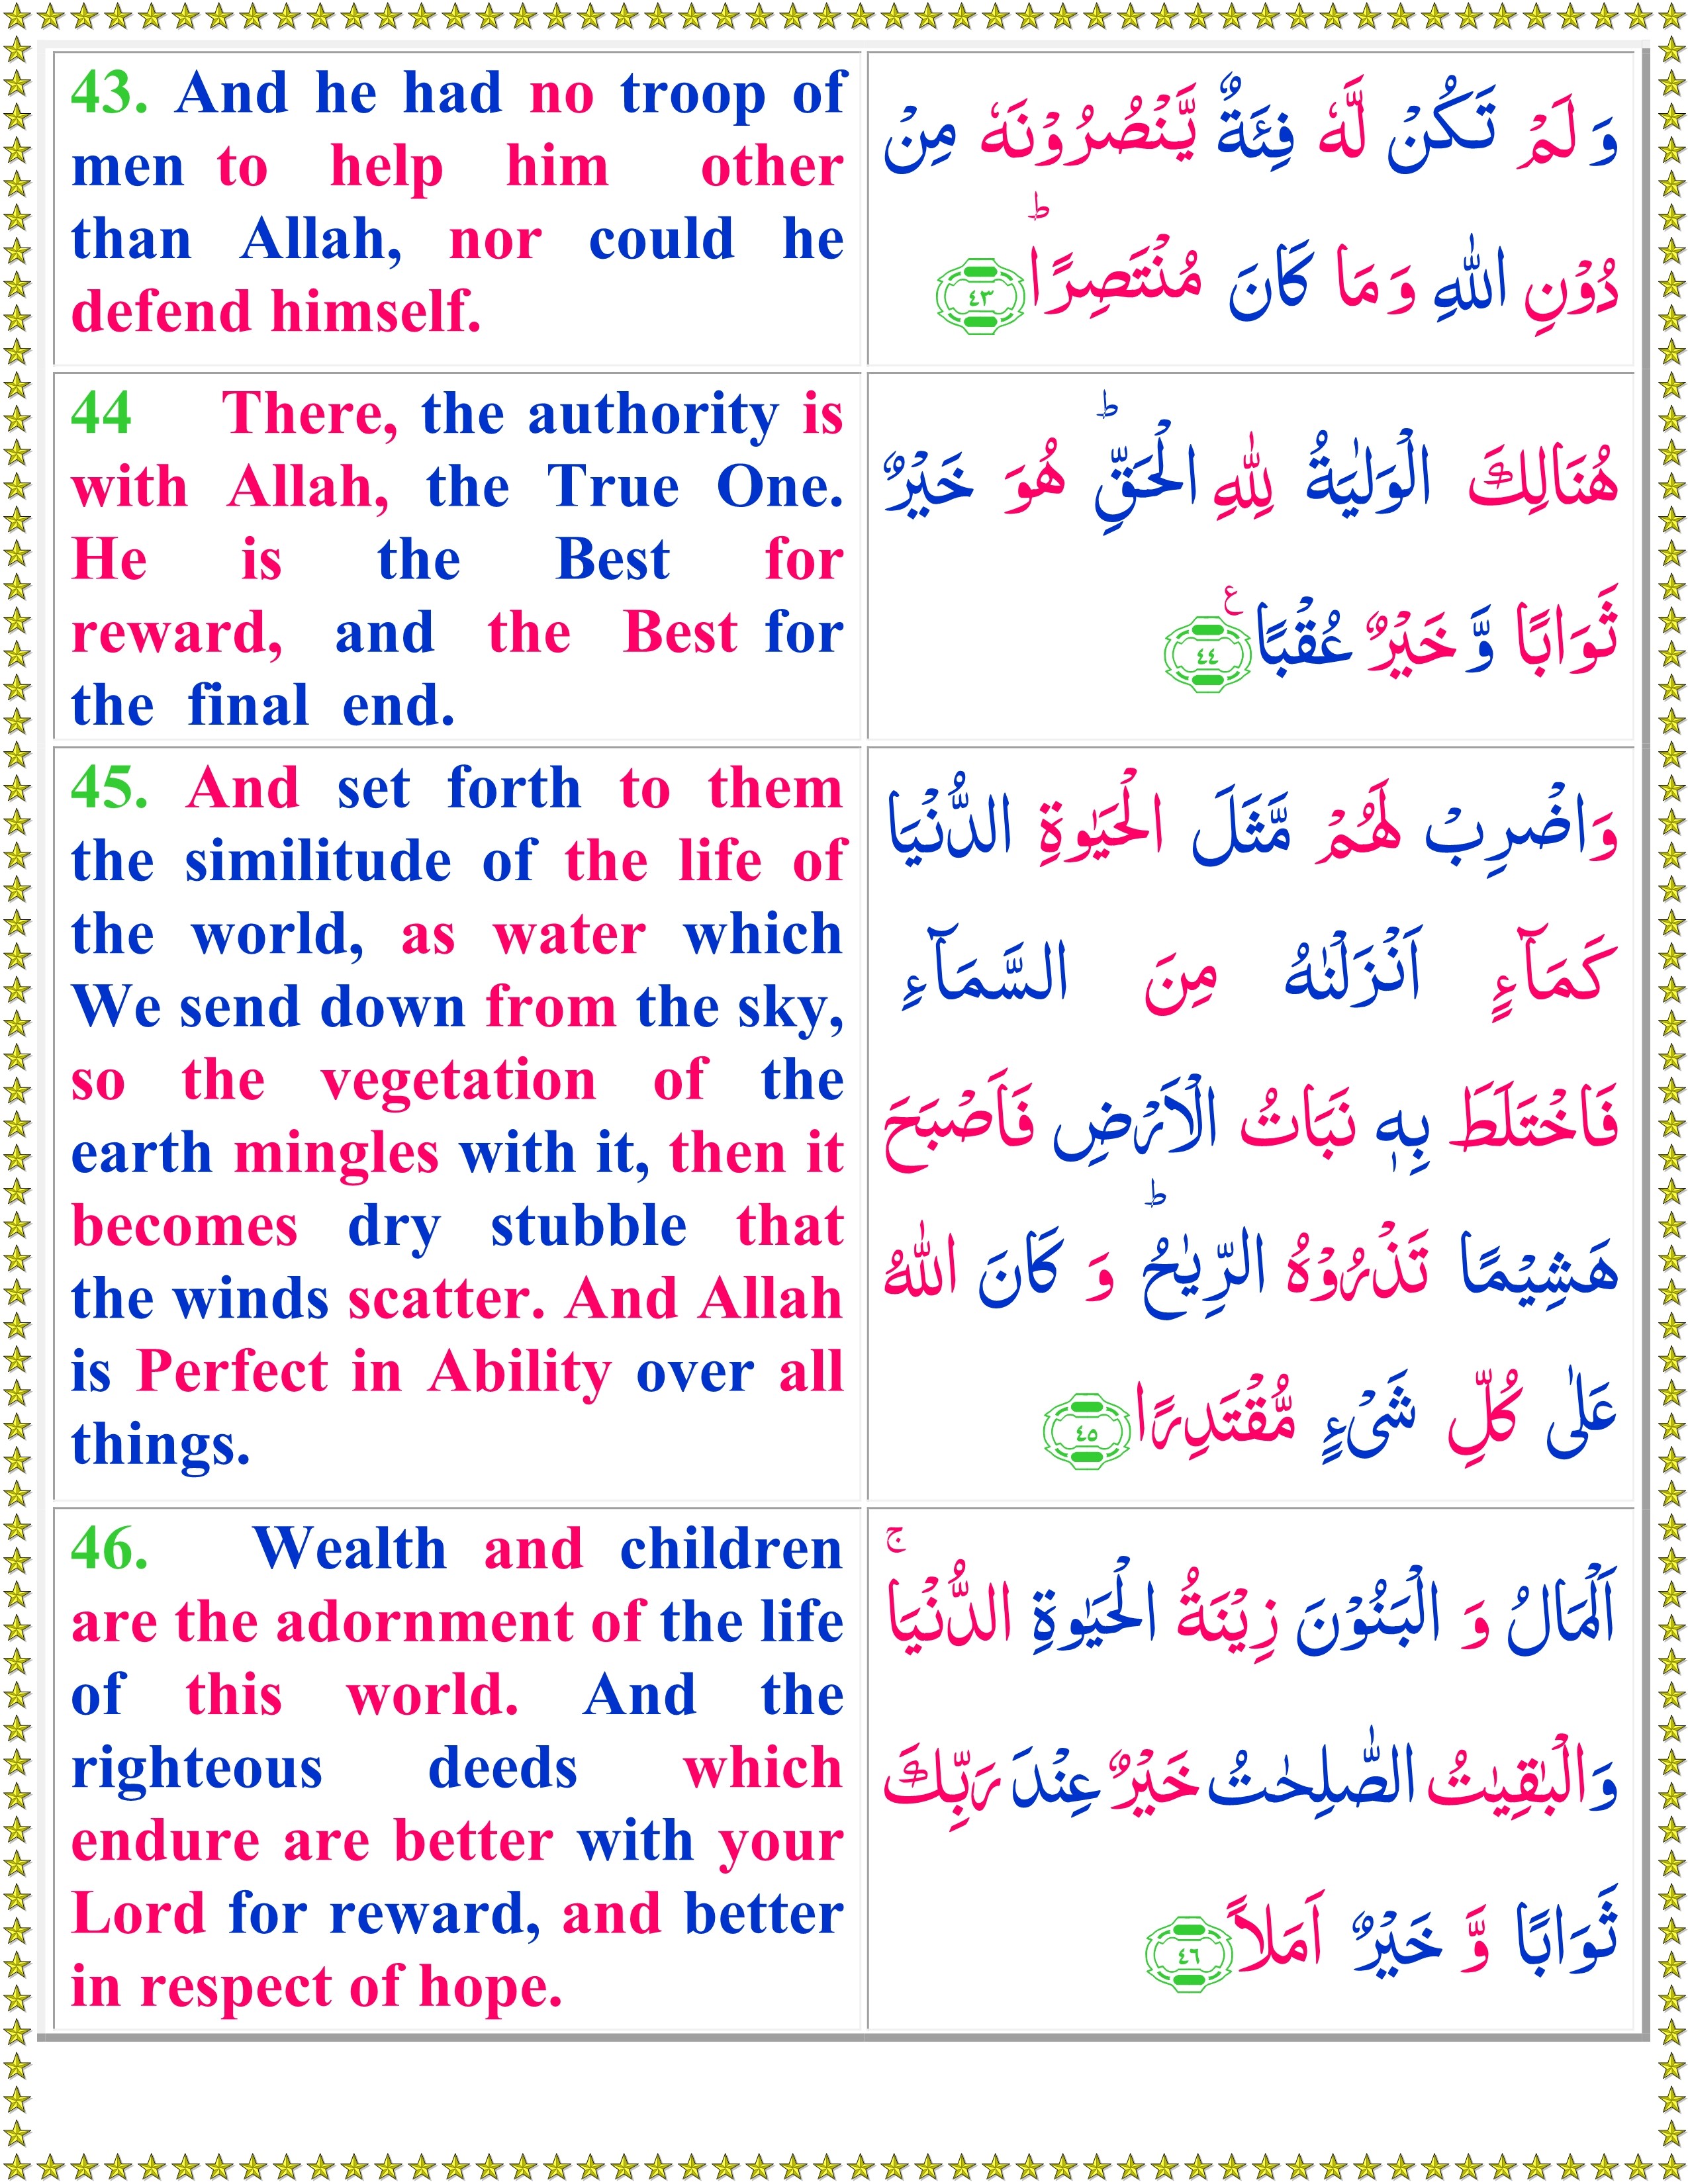 Read Surah Al Kahf With English Translation Page 2 Of 3 Quran O Sunnat